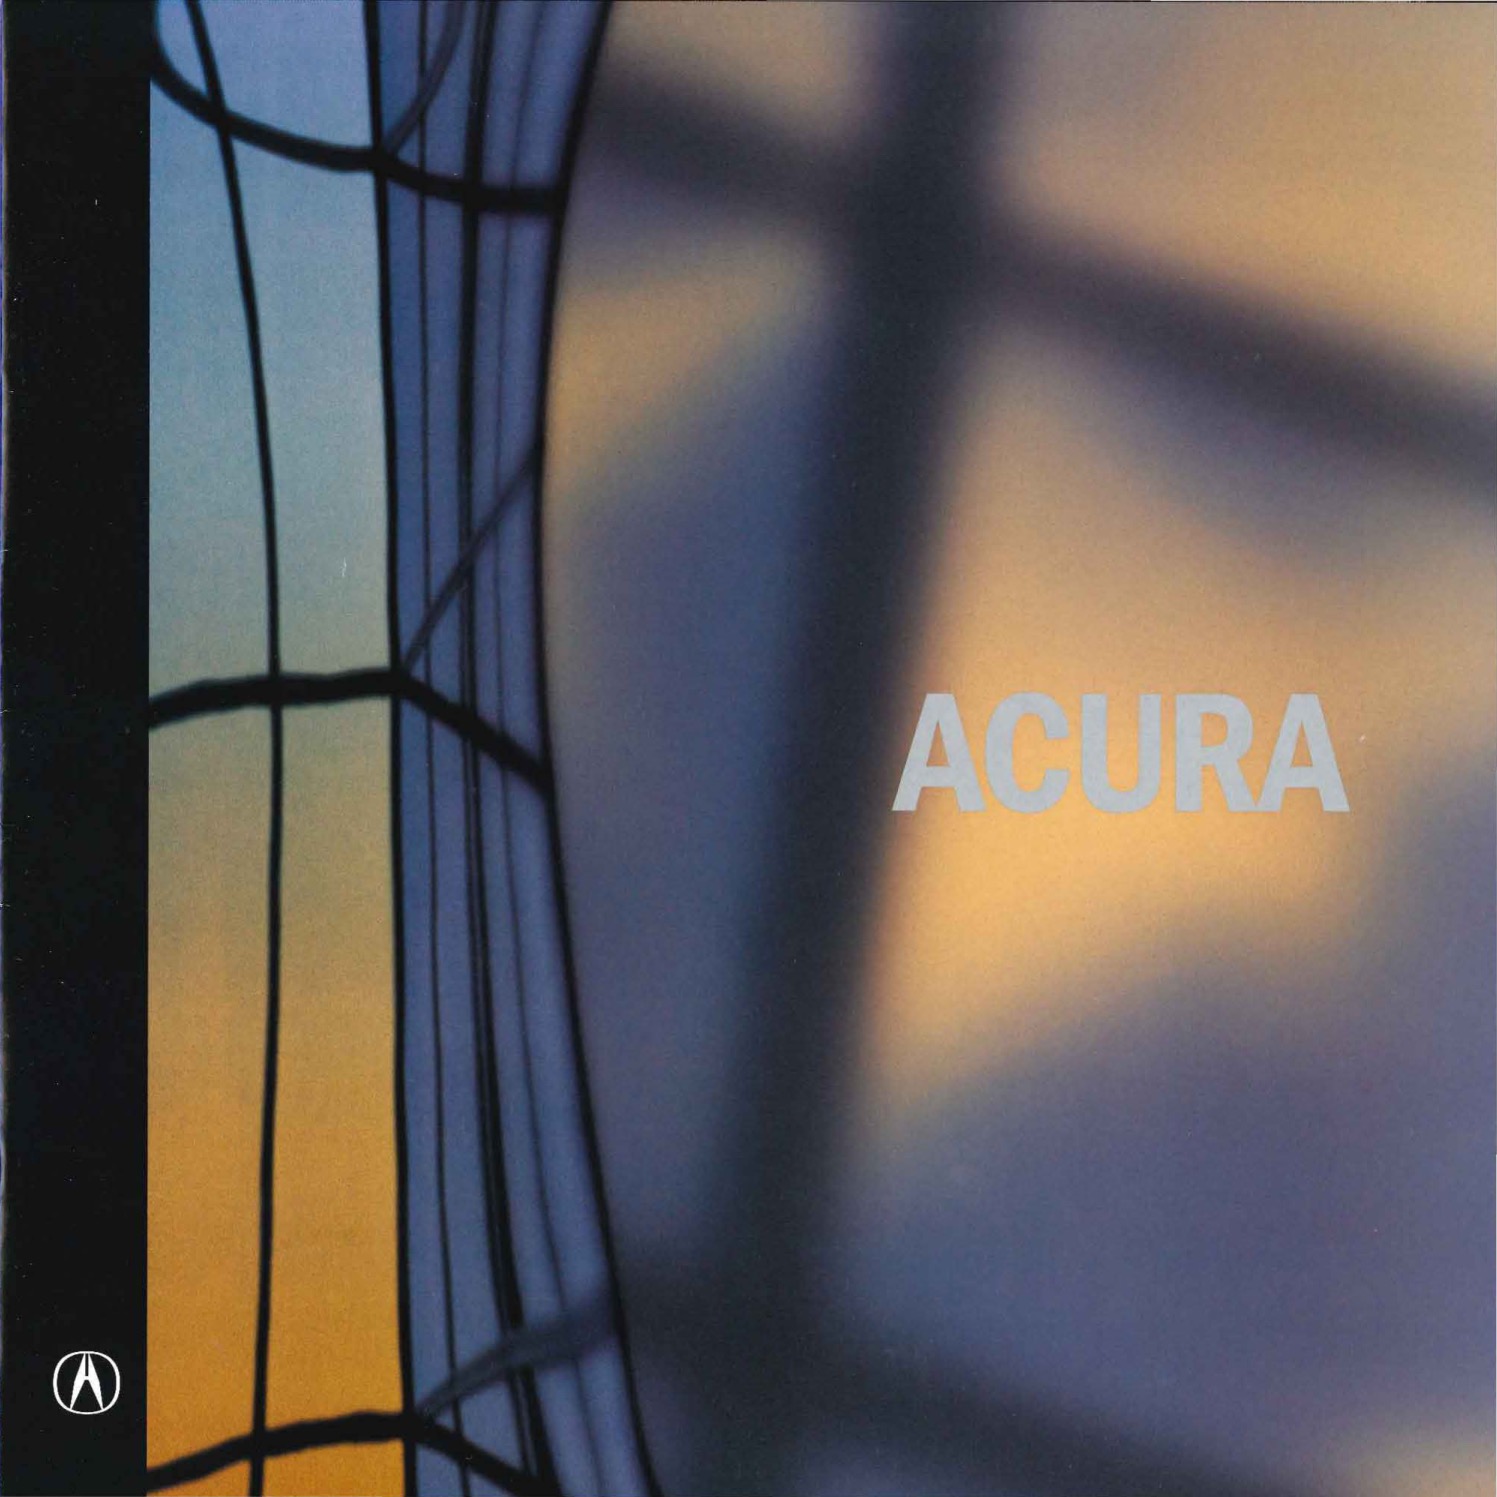 2001 Acura Full Line Brochure